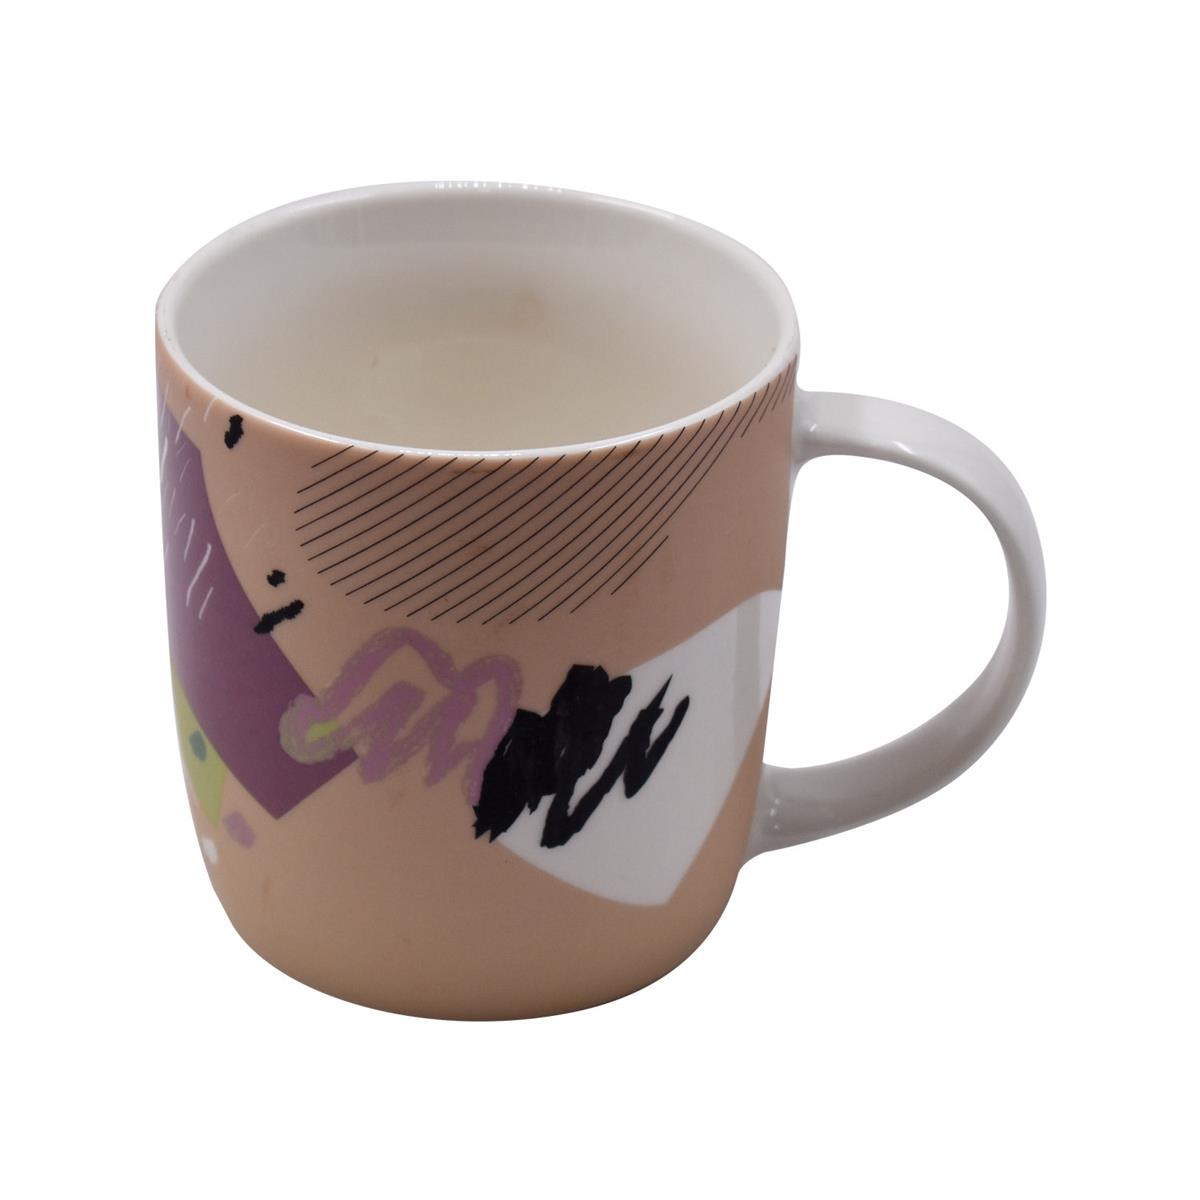 Kookee Ceramic Coffee or Tea Mug with handle for Office, Home or Gifting - 325ml (R4901-C)